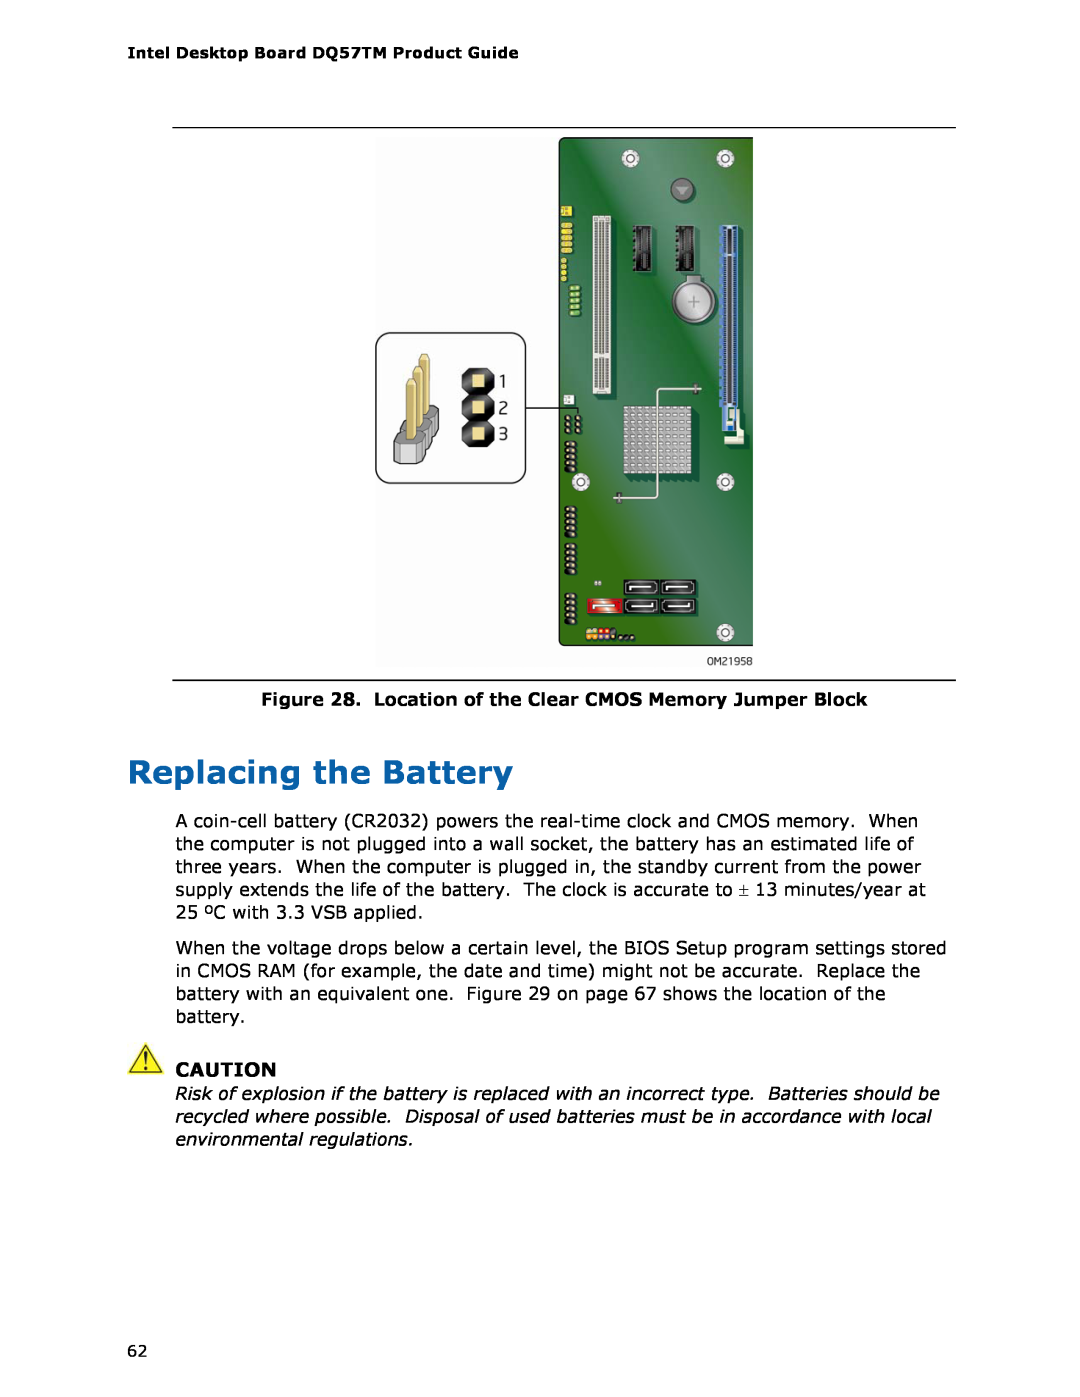 Intel DQ57TM manual Replacing the Battery 